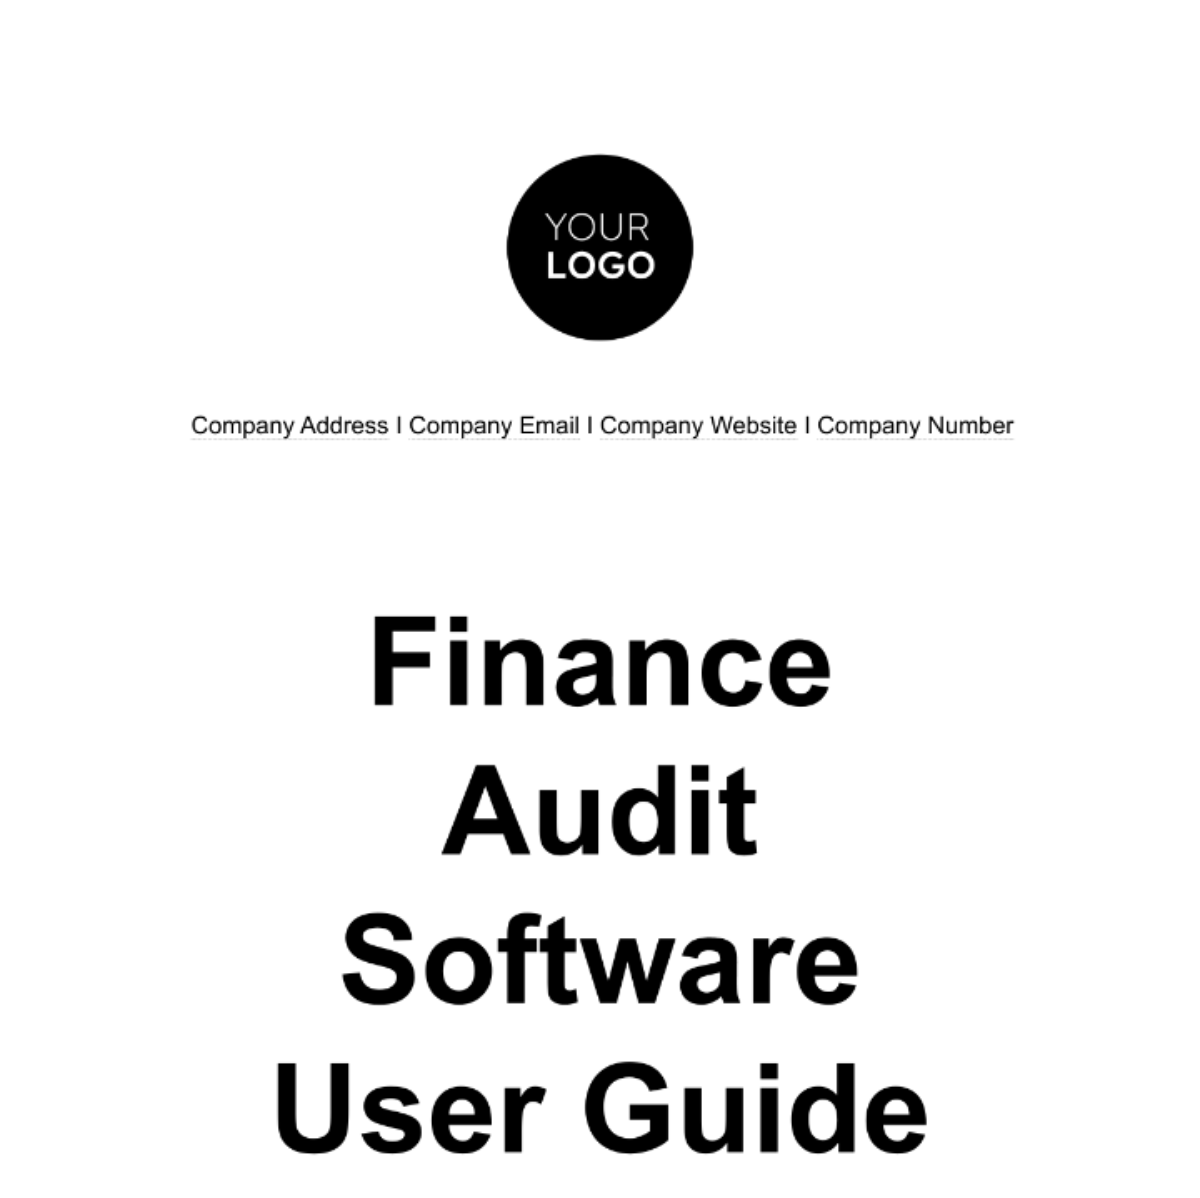 Finance Audit Software User Guide Template